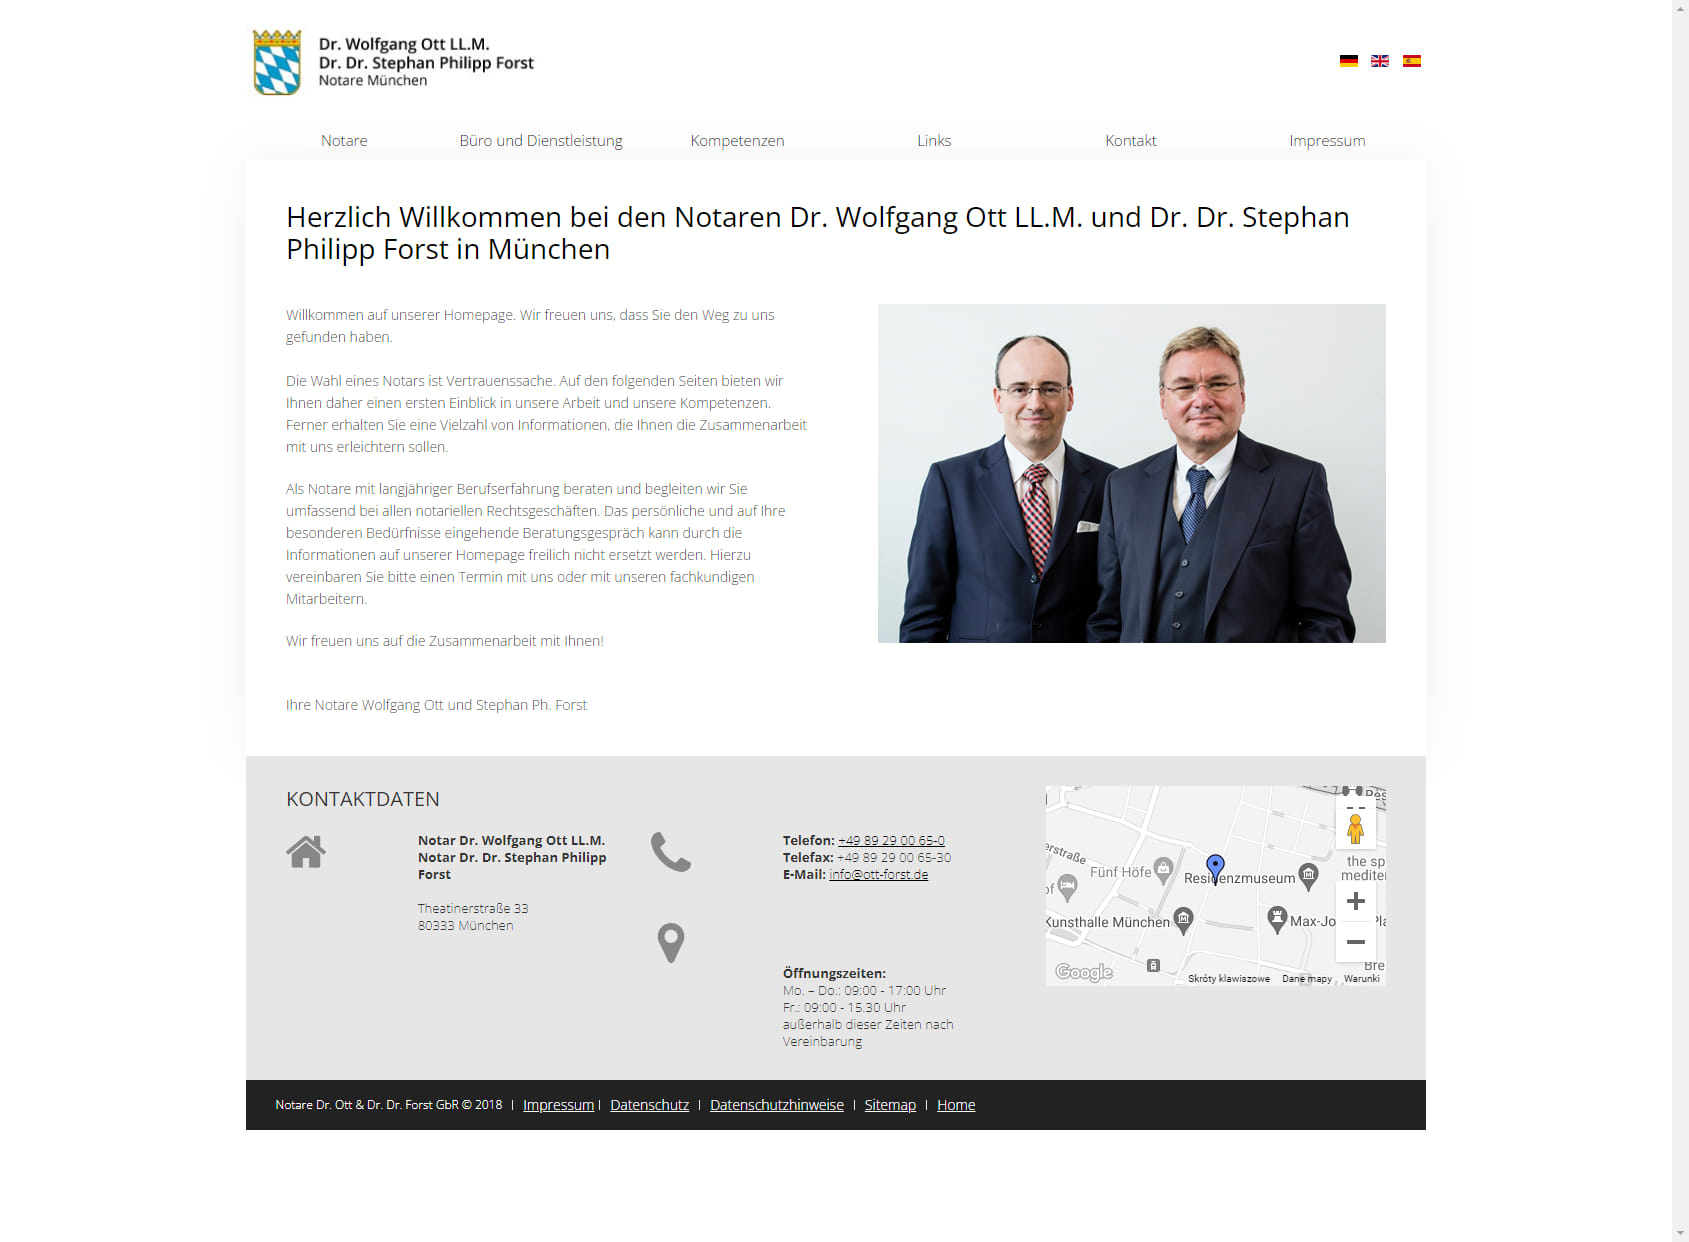 Dr. Wolfgang Ott und Dr. Dr. Stephan Philipp Forst